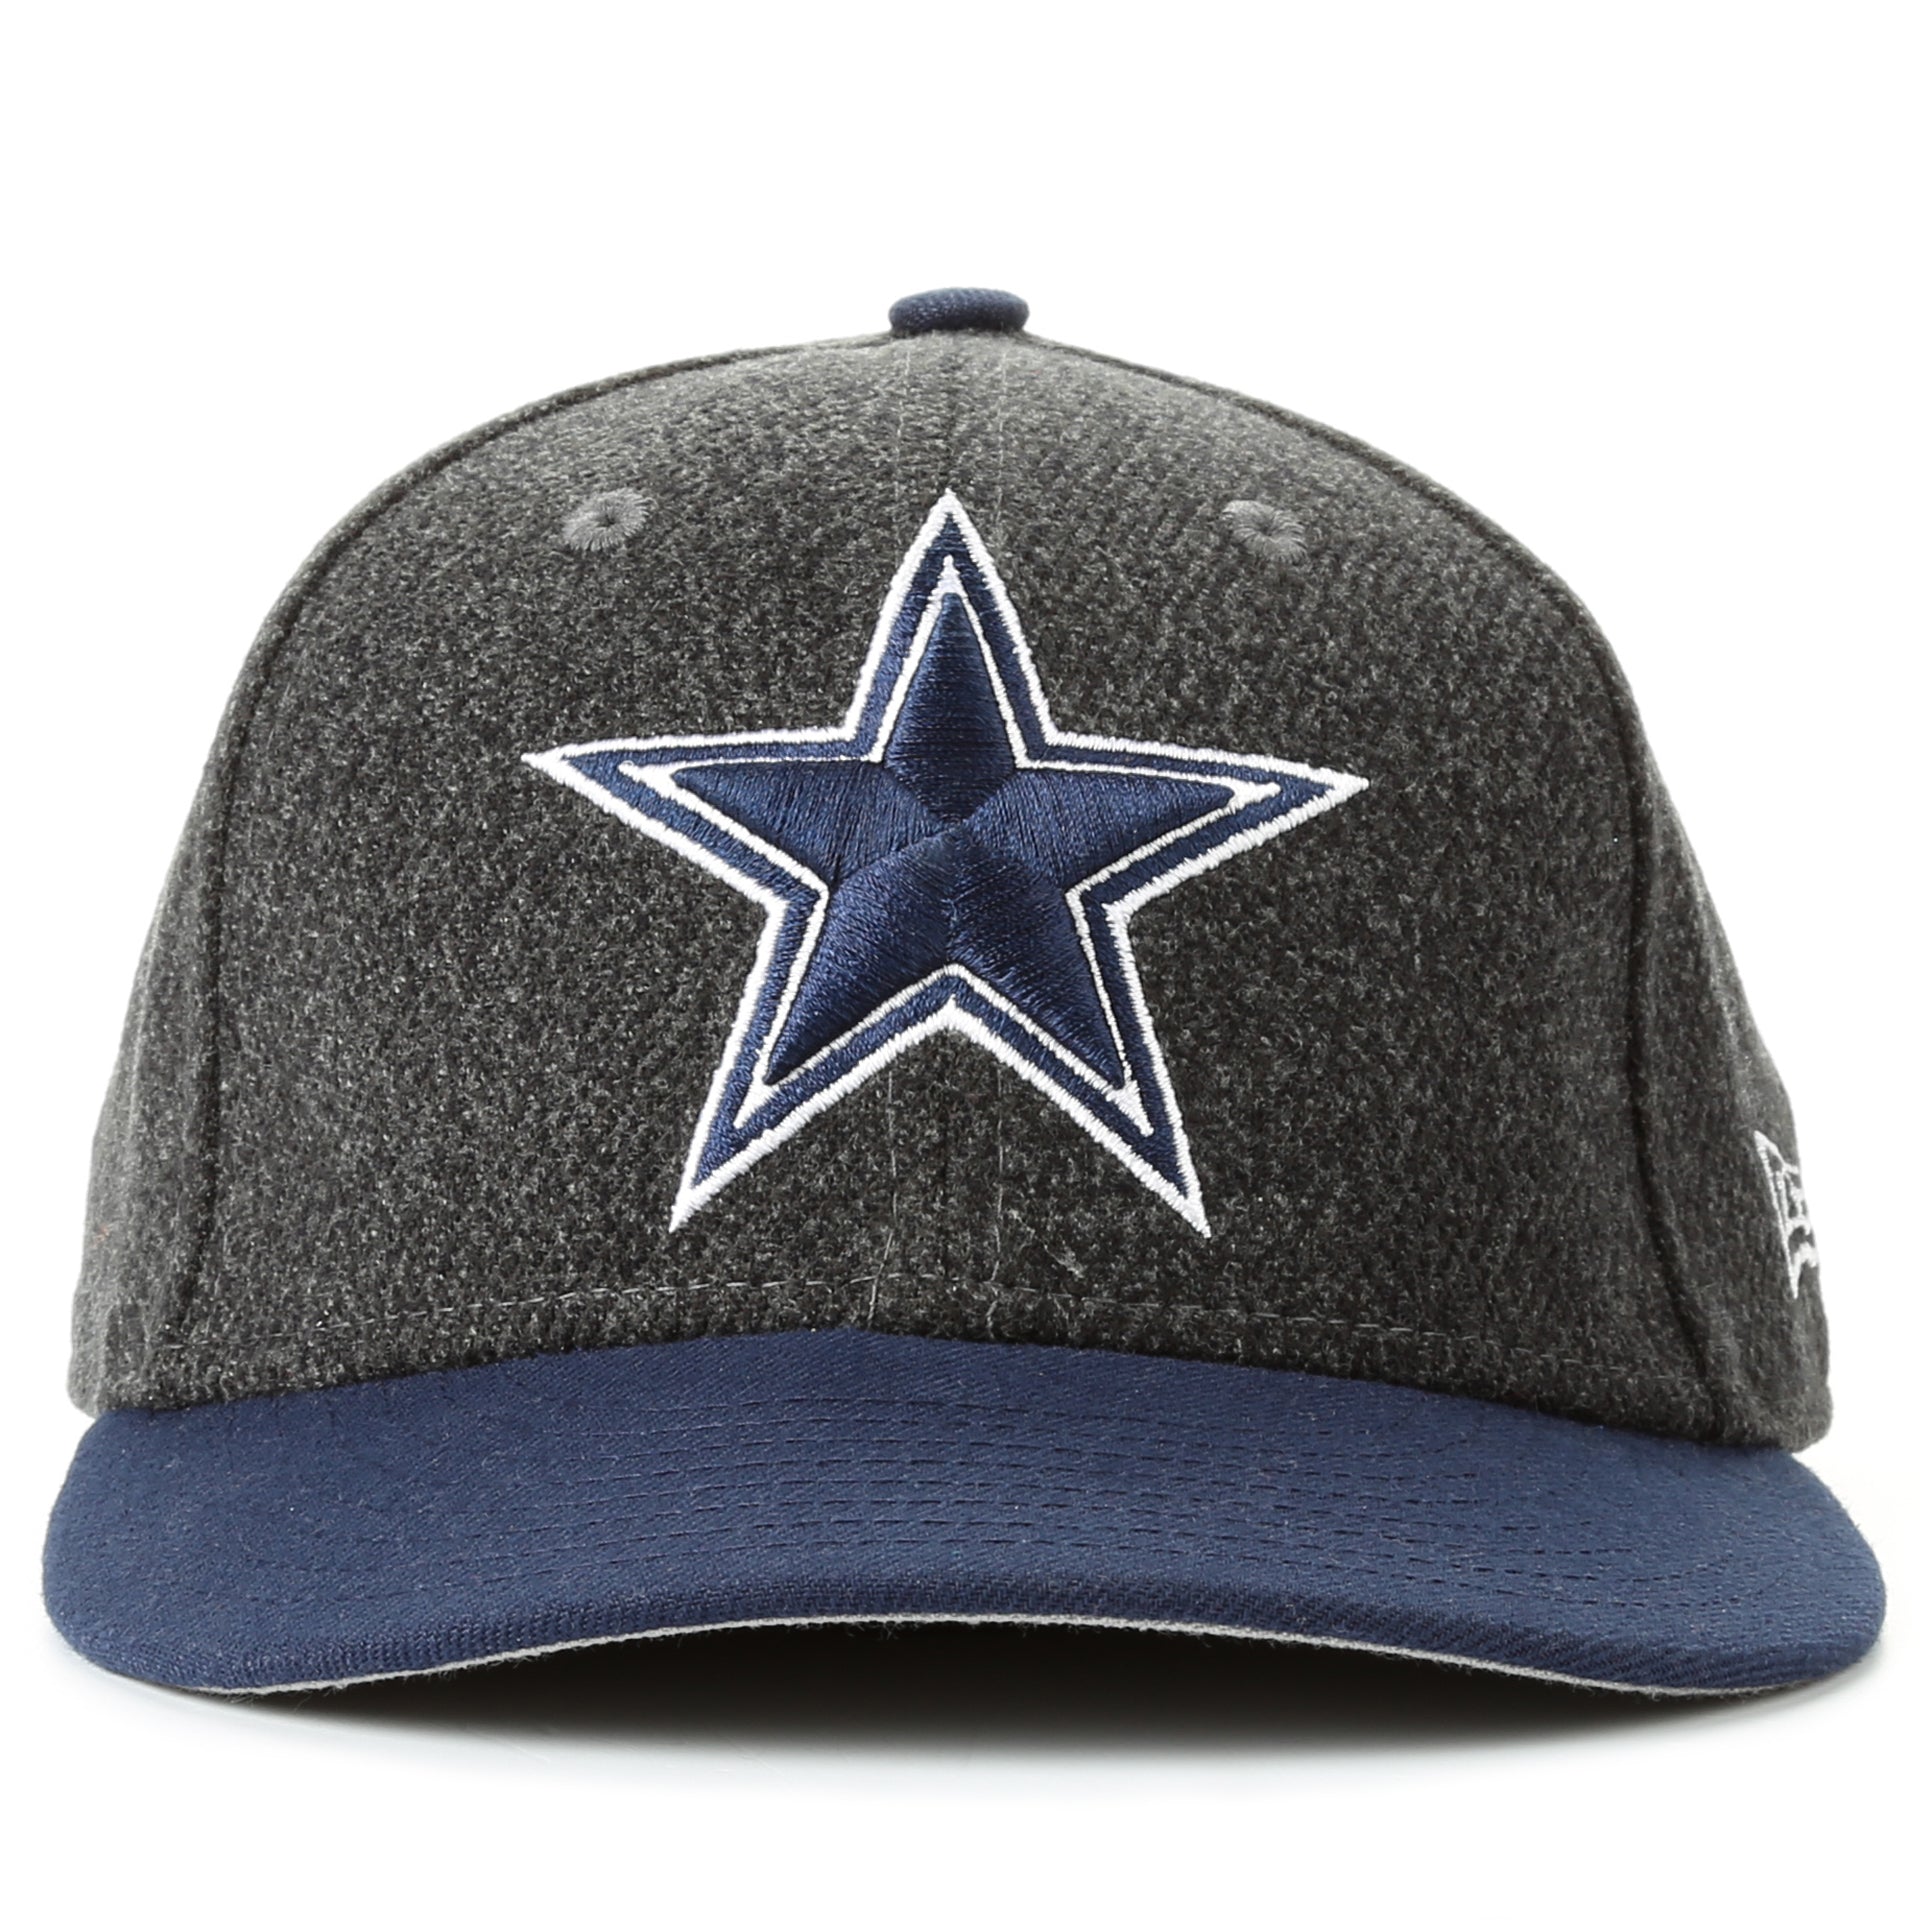 New Era 9Fifty Classic Trim Snapback - Dallas Cowboys/Black - New Star